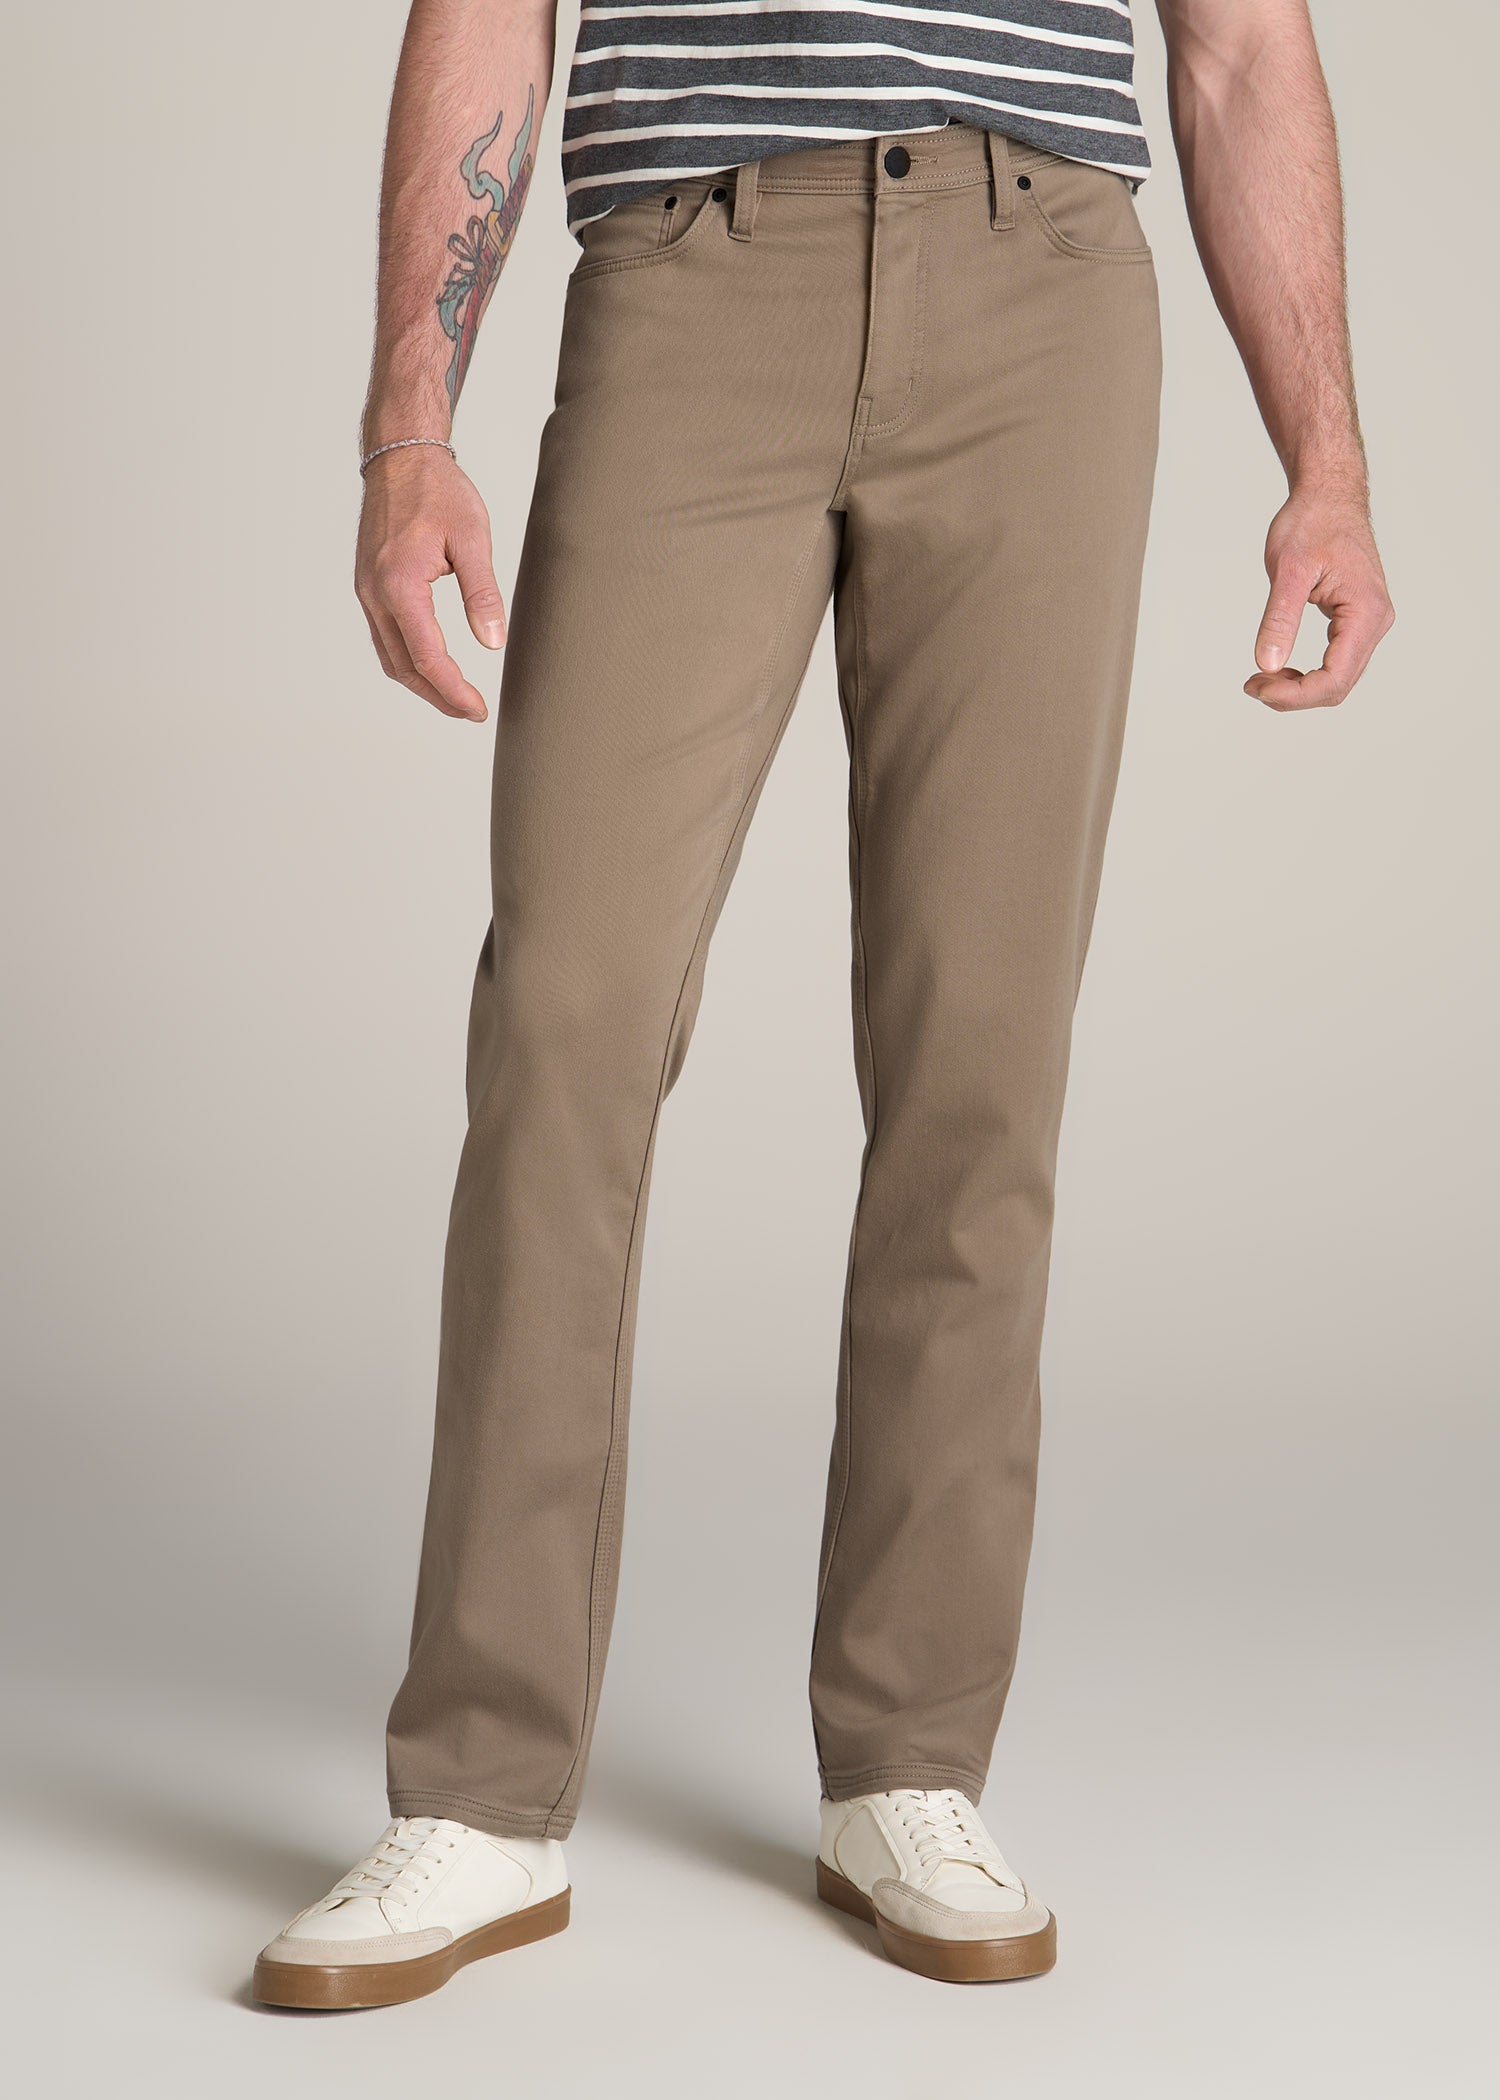 American-Tall-Men-Everyday-Comfort-Five-Pocket-Pant-Dark-Sand-front